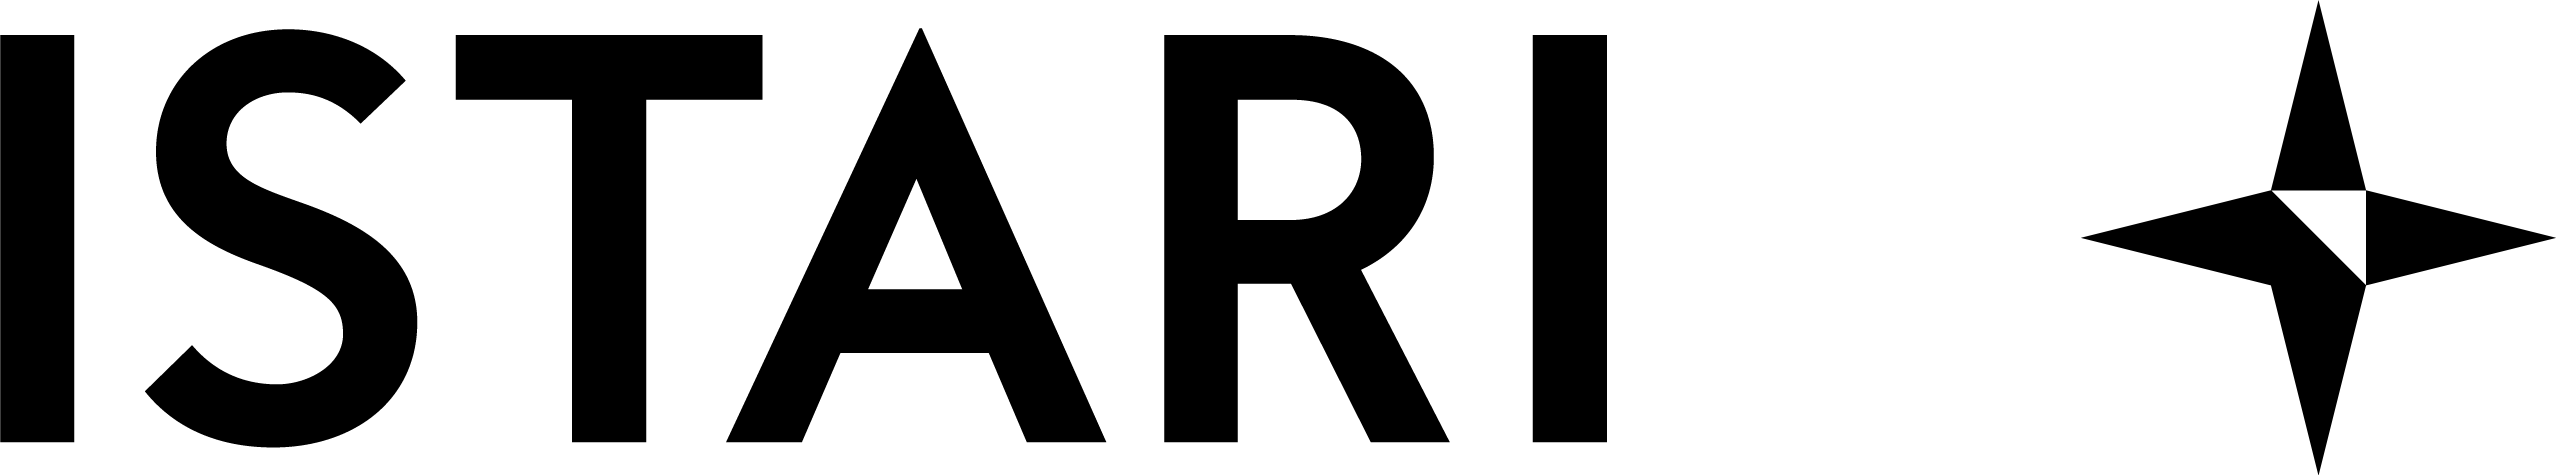 istari logo black